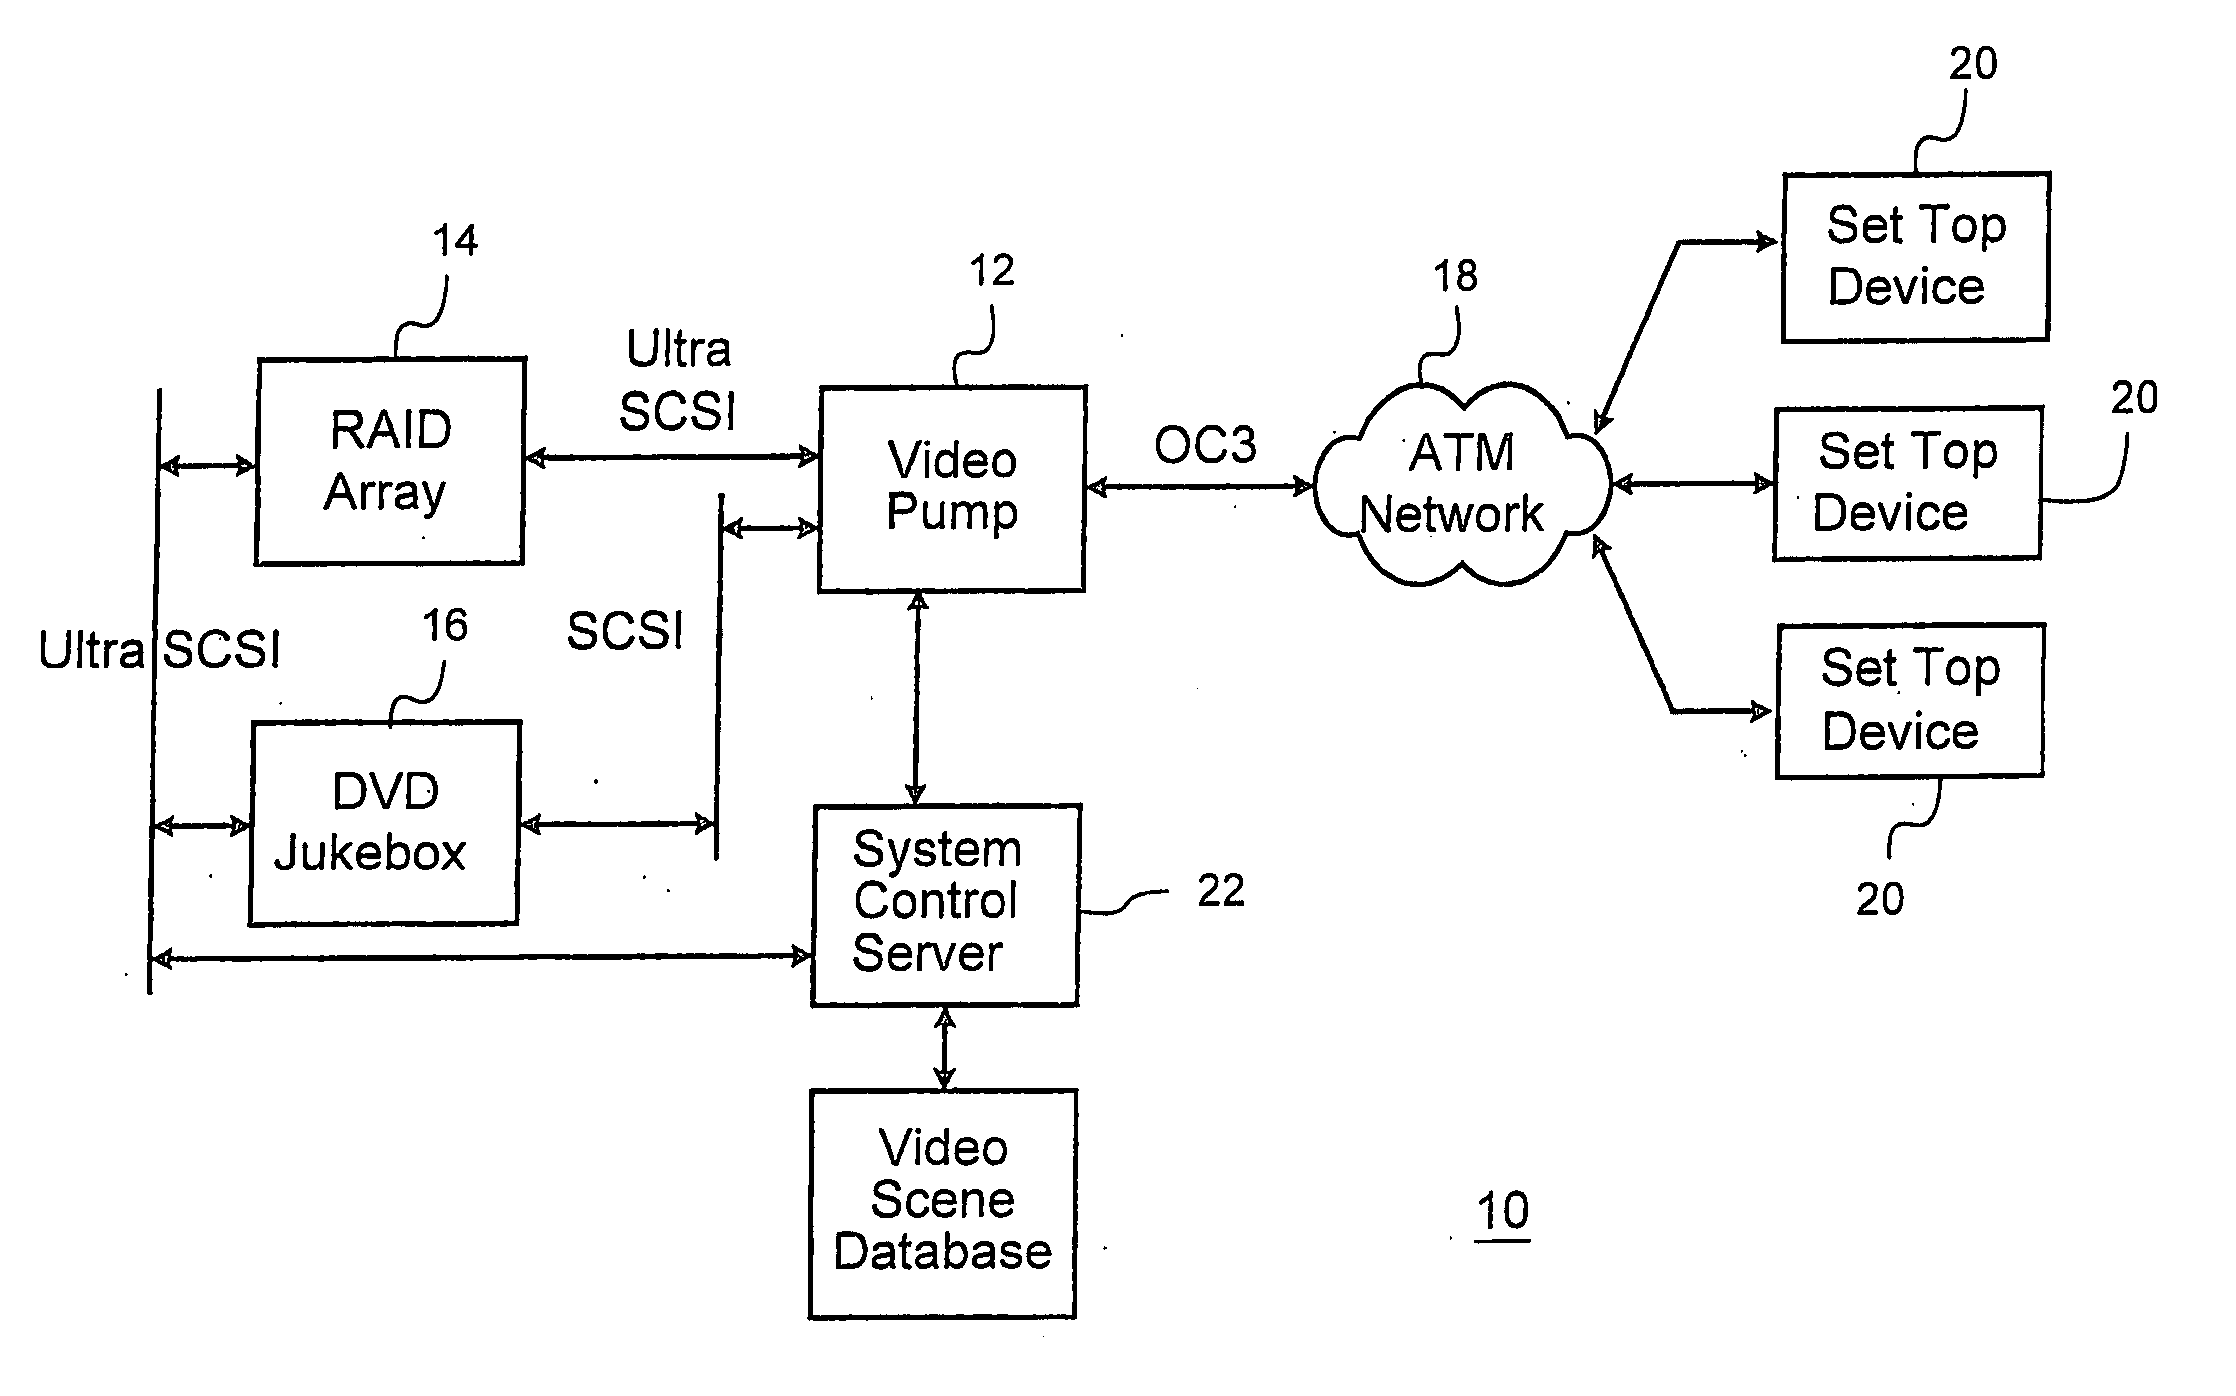 Multi-channel video pump